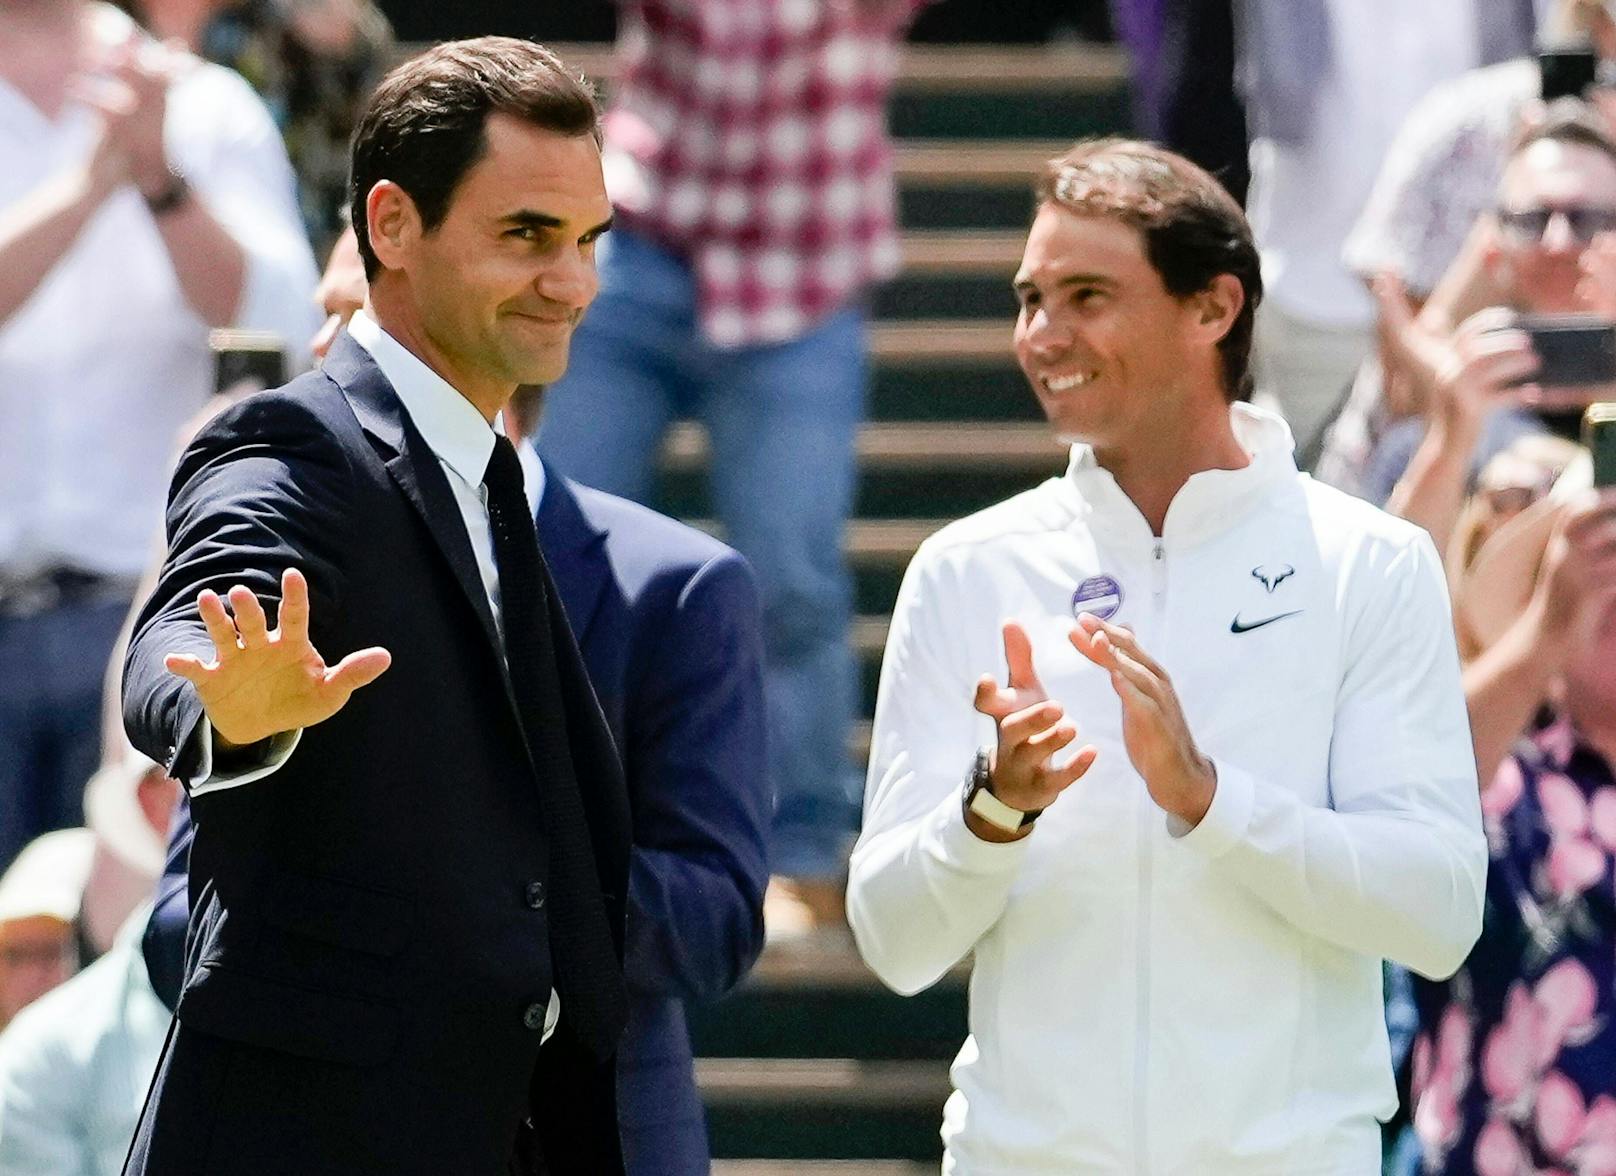 Roger Federer ist zurückgetreten, Rafael Nadal fand berührende Worte.